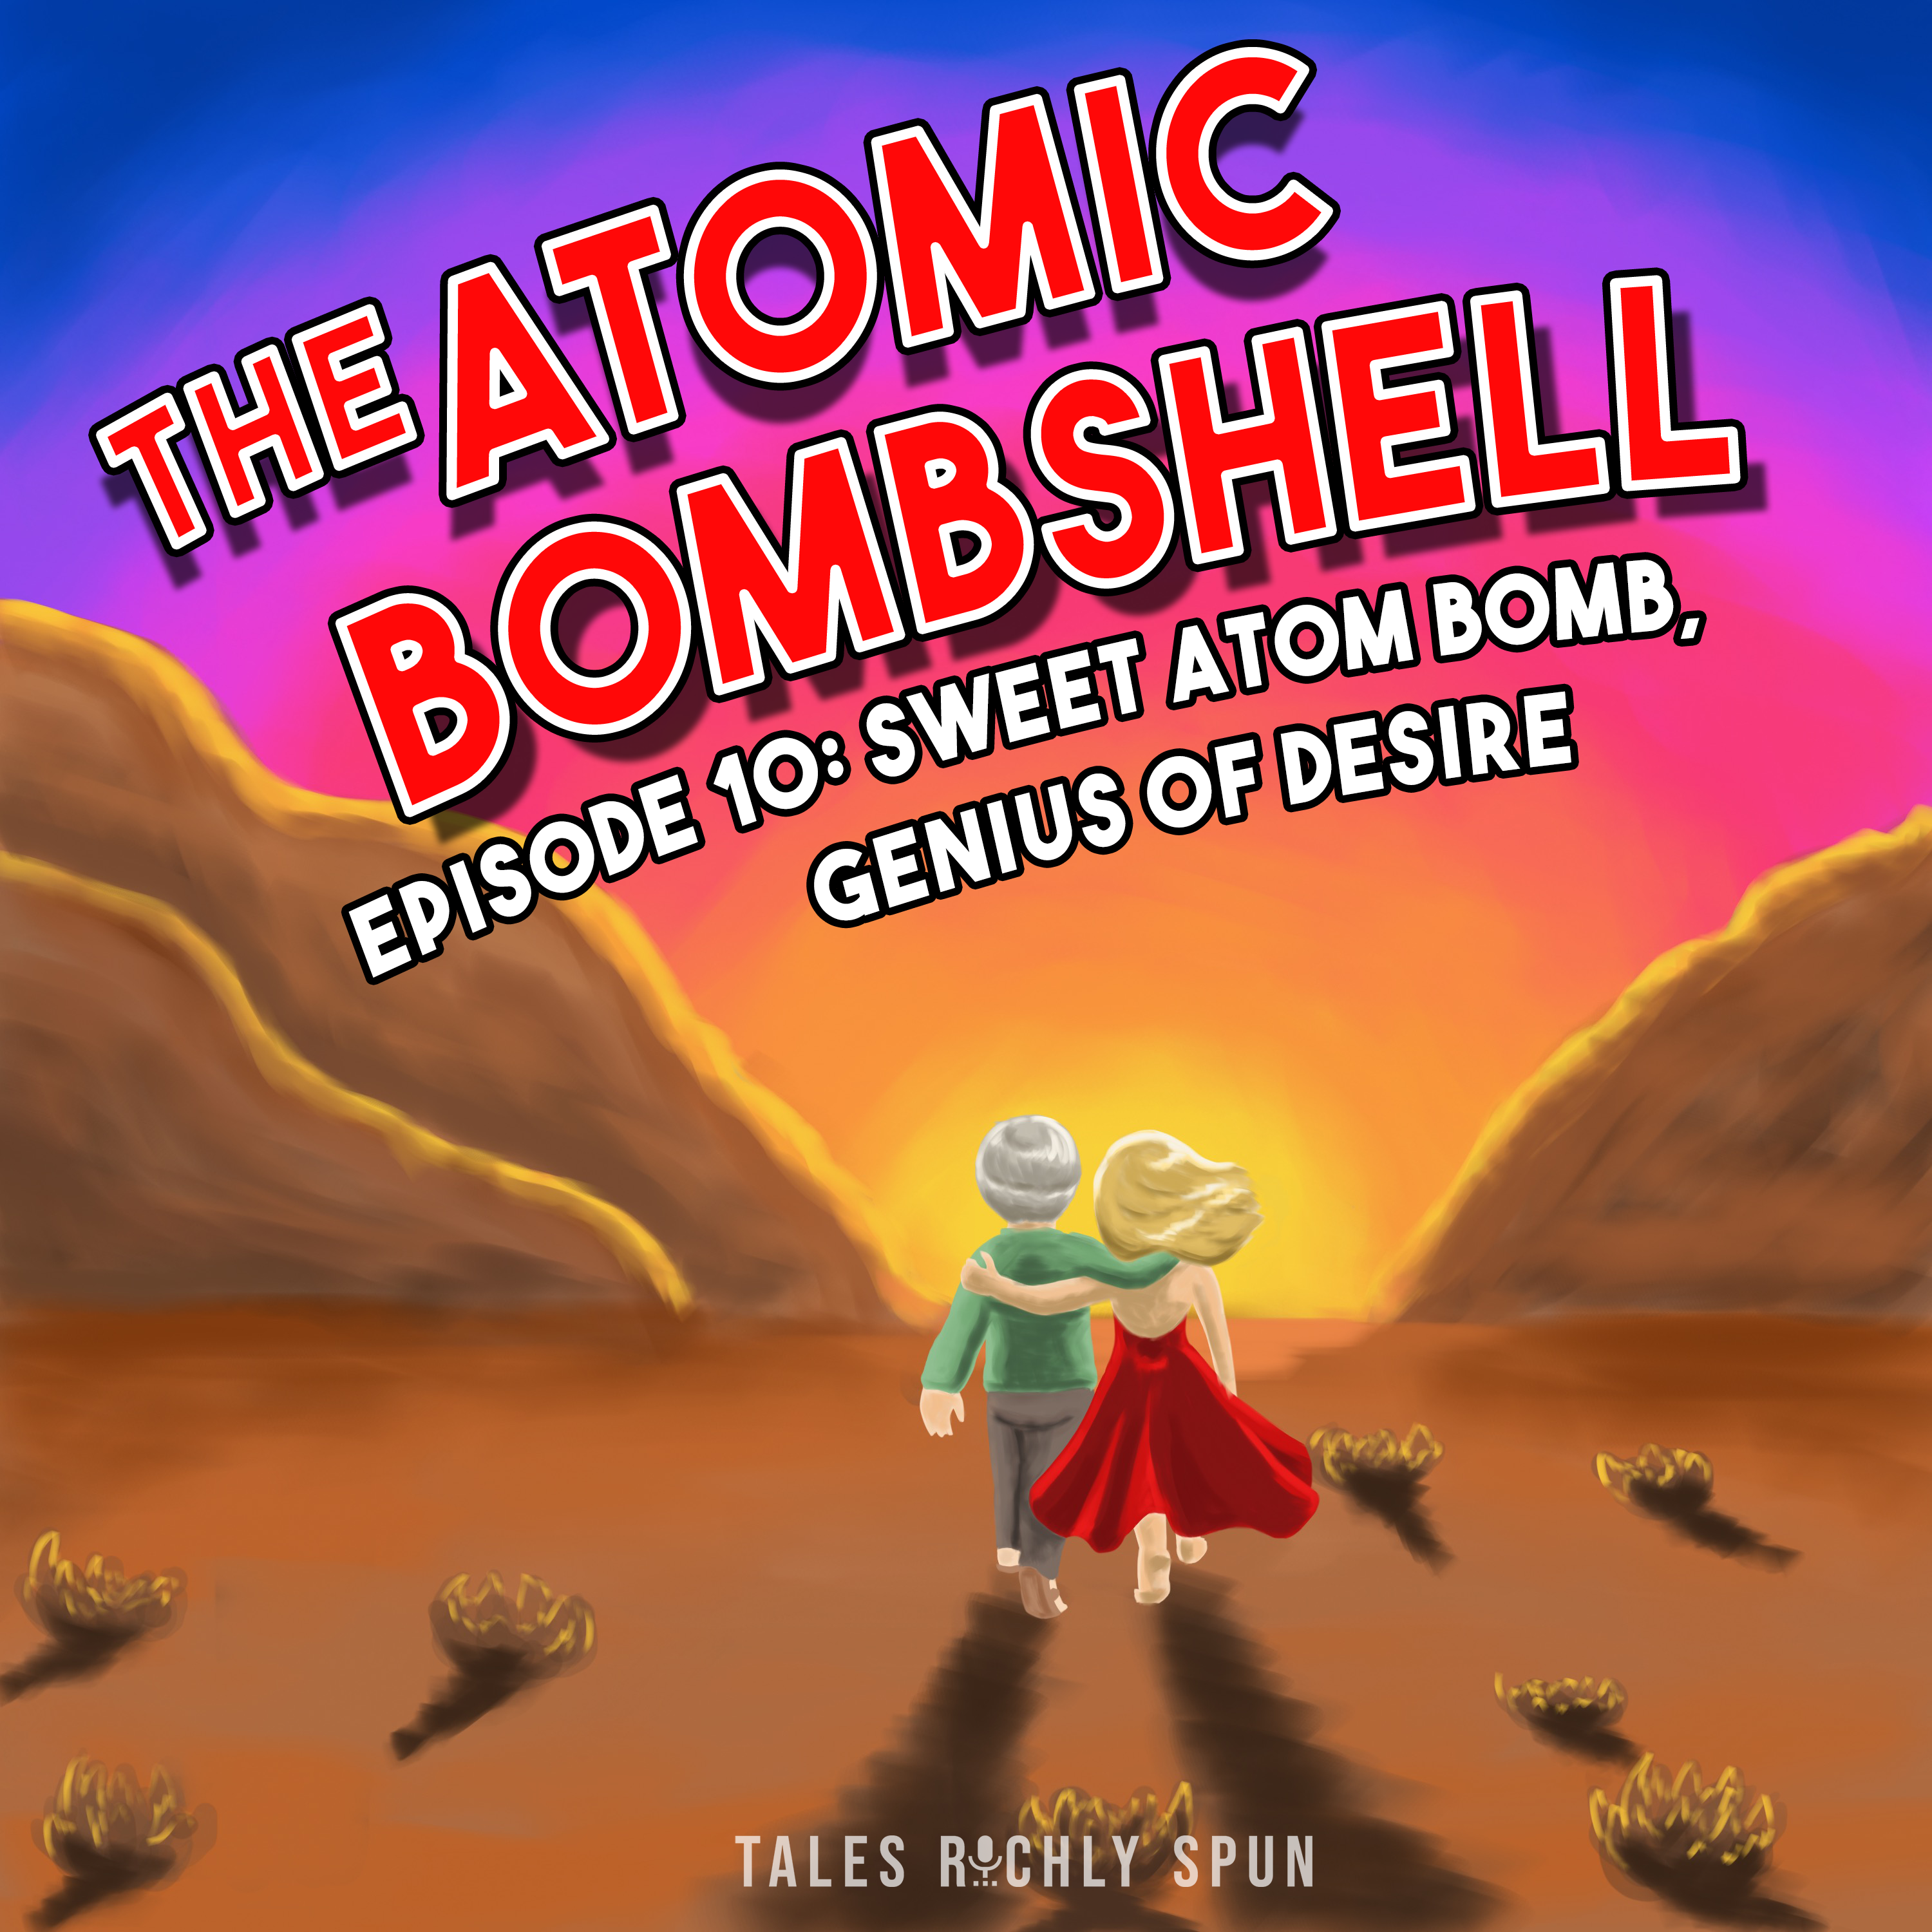 Episode 10: Sweet Atom Bomb, Genius of Desire